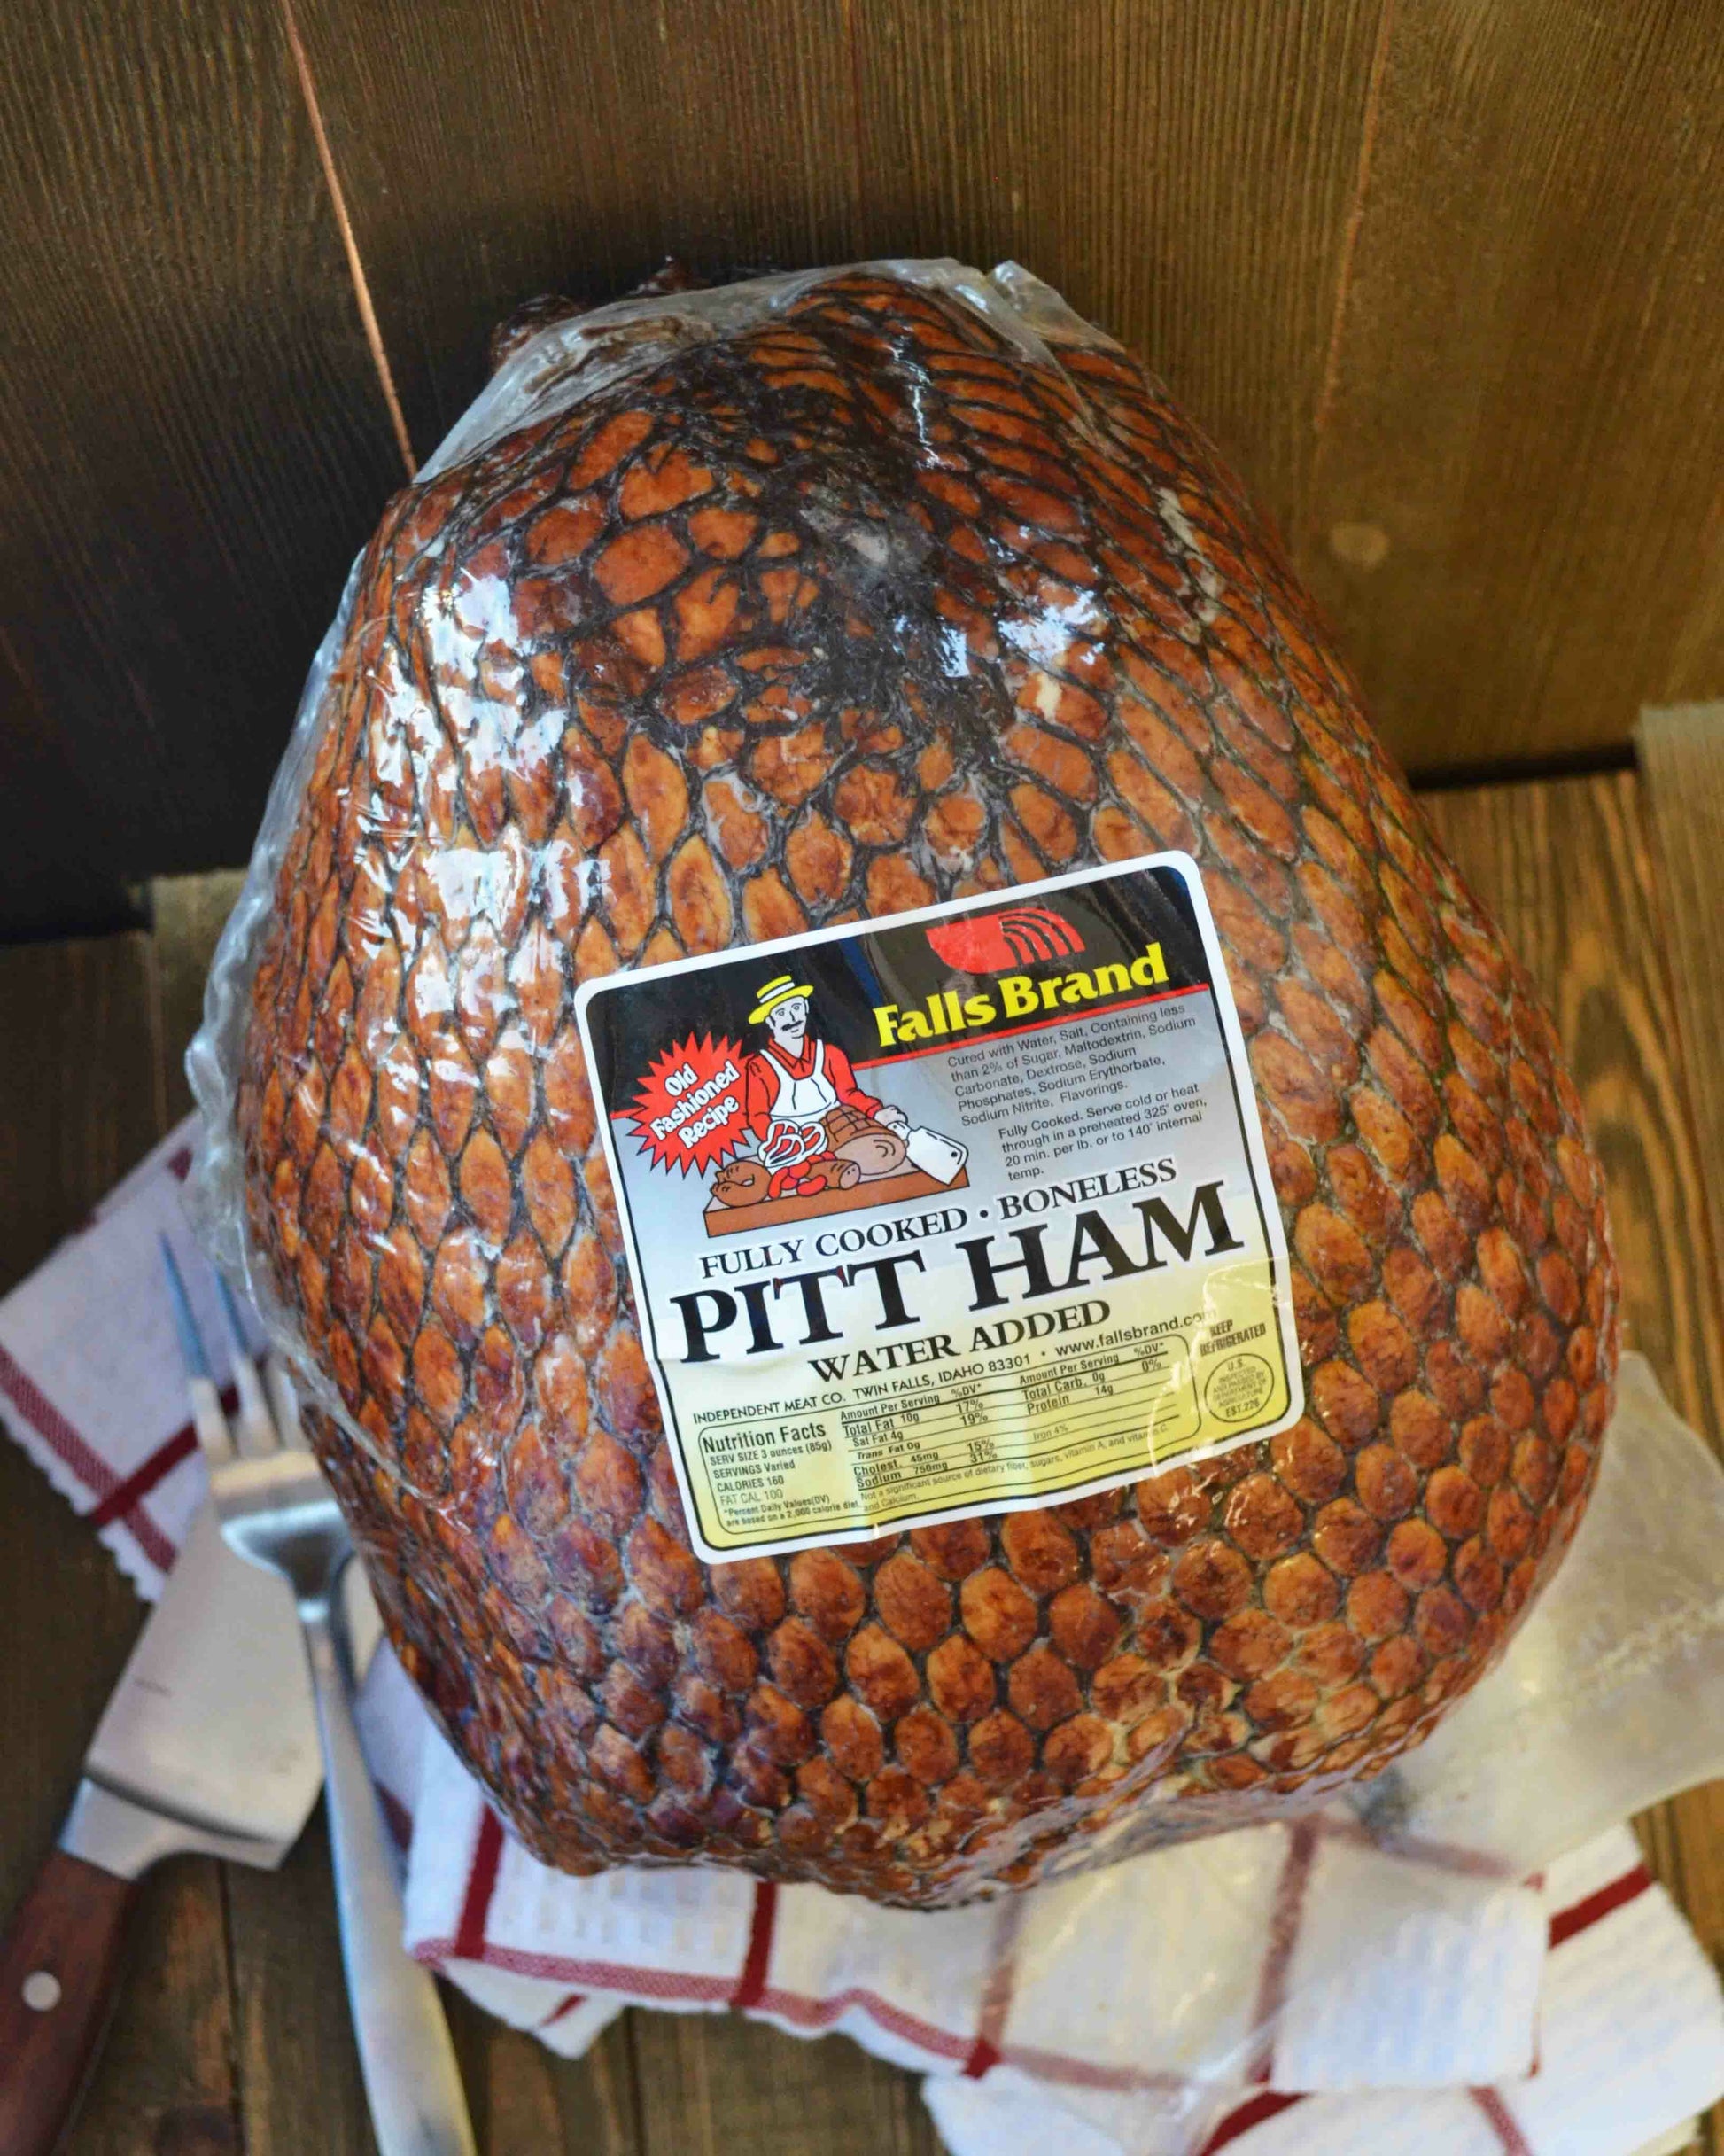 Whole Holiday Boneless Pitt Ham